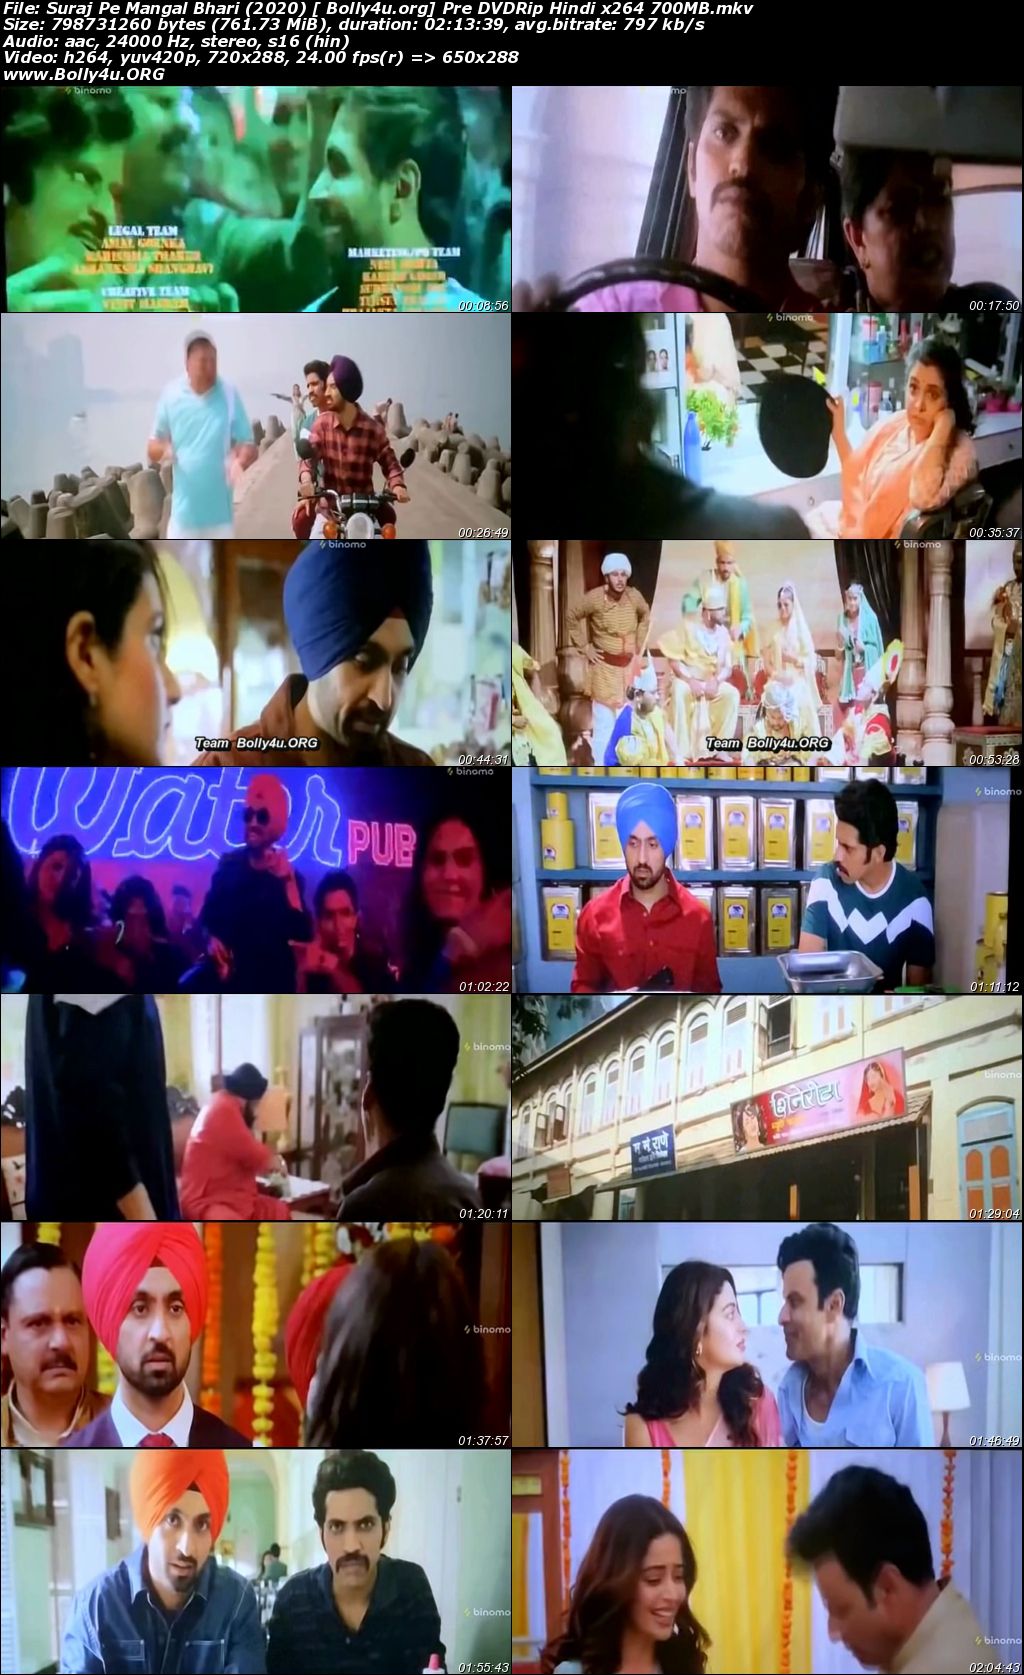 Suraj Pe Mangal Bhari 2020 Pre DVDRip 400MB Hindi Movie 480p Download